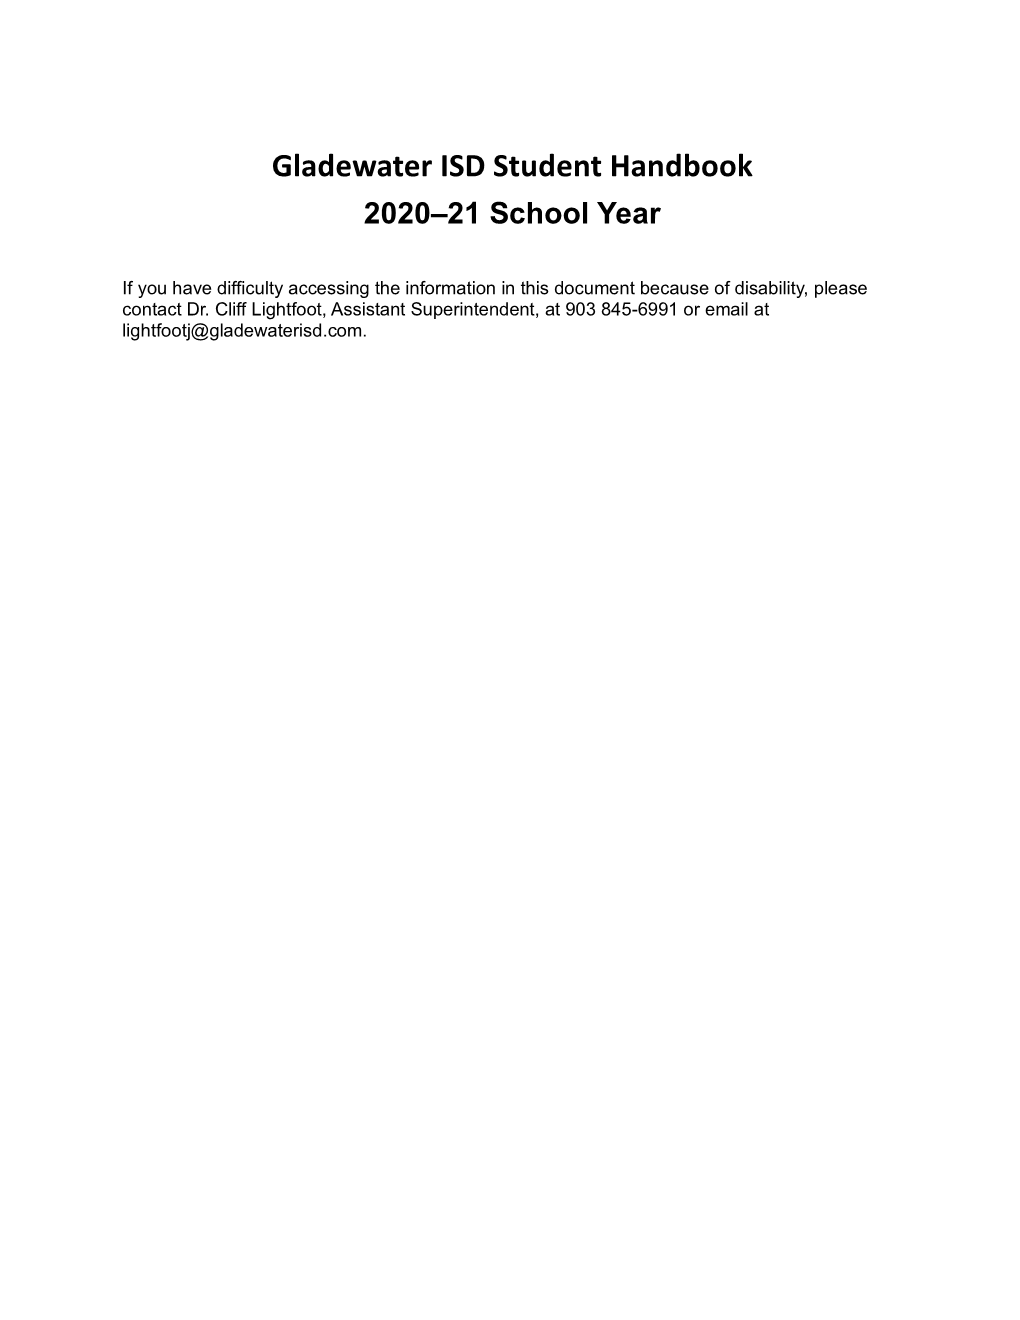 Gladewater ISD Student Handbook 2020–21 School Year